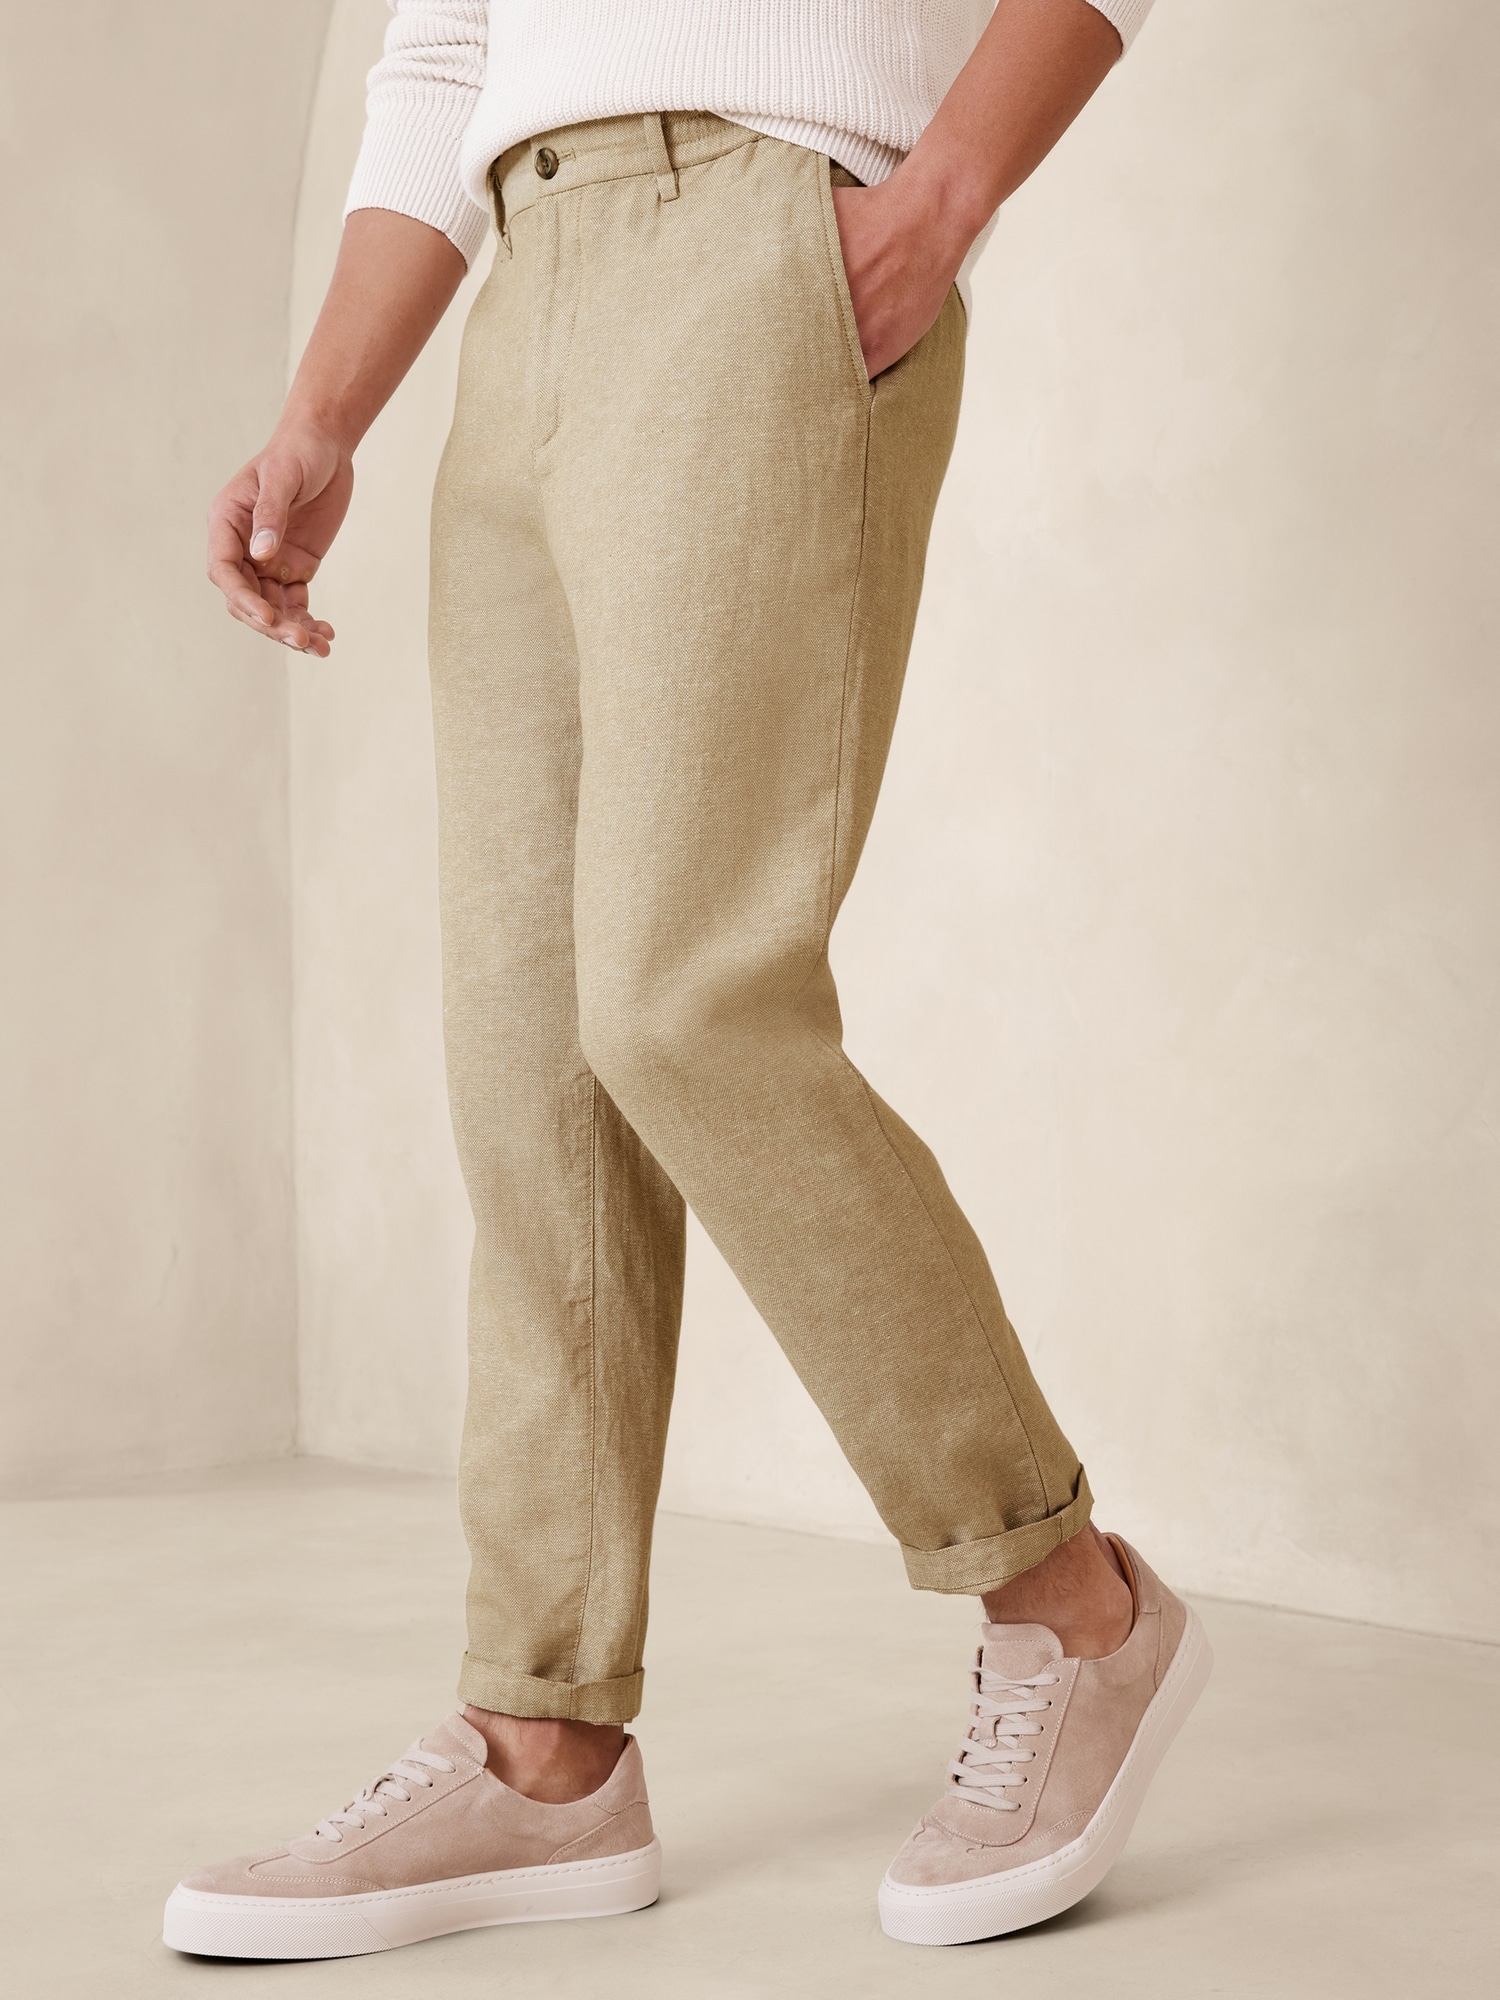 Banana Republic Linen Cotton Blend Pants Athletic Fit Men's Size 29 x 30  NWT - Helia Beer Co